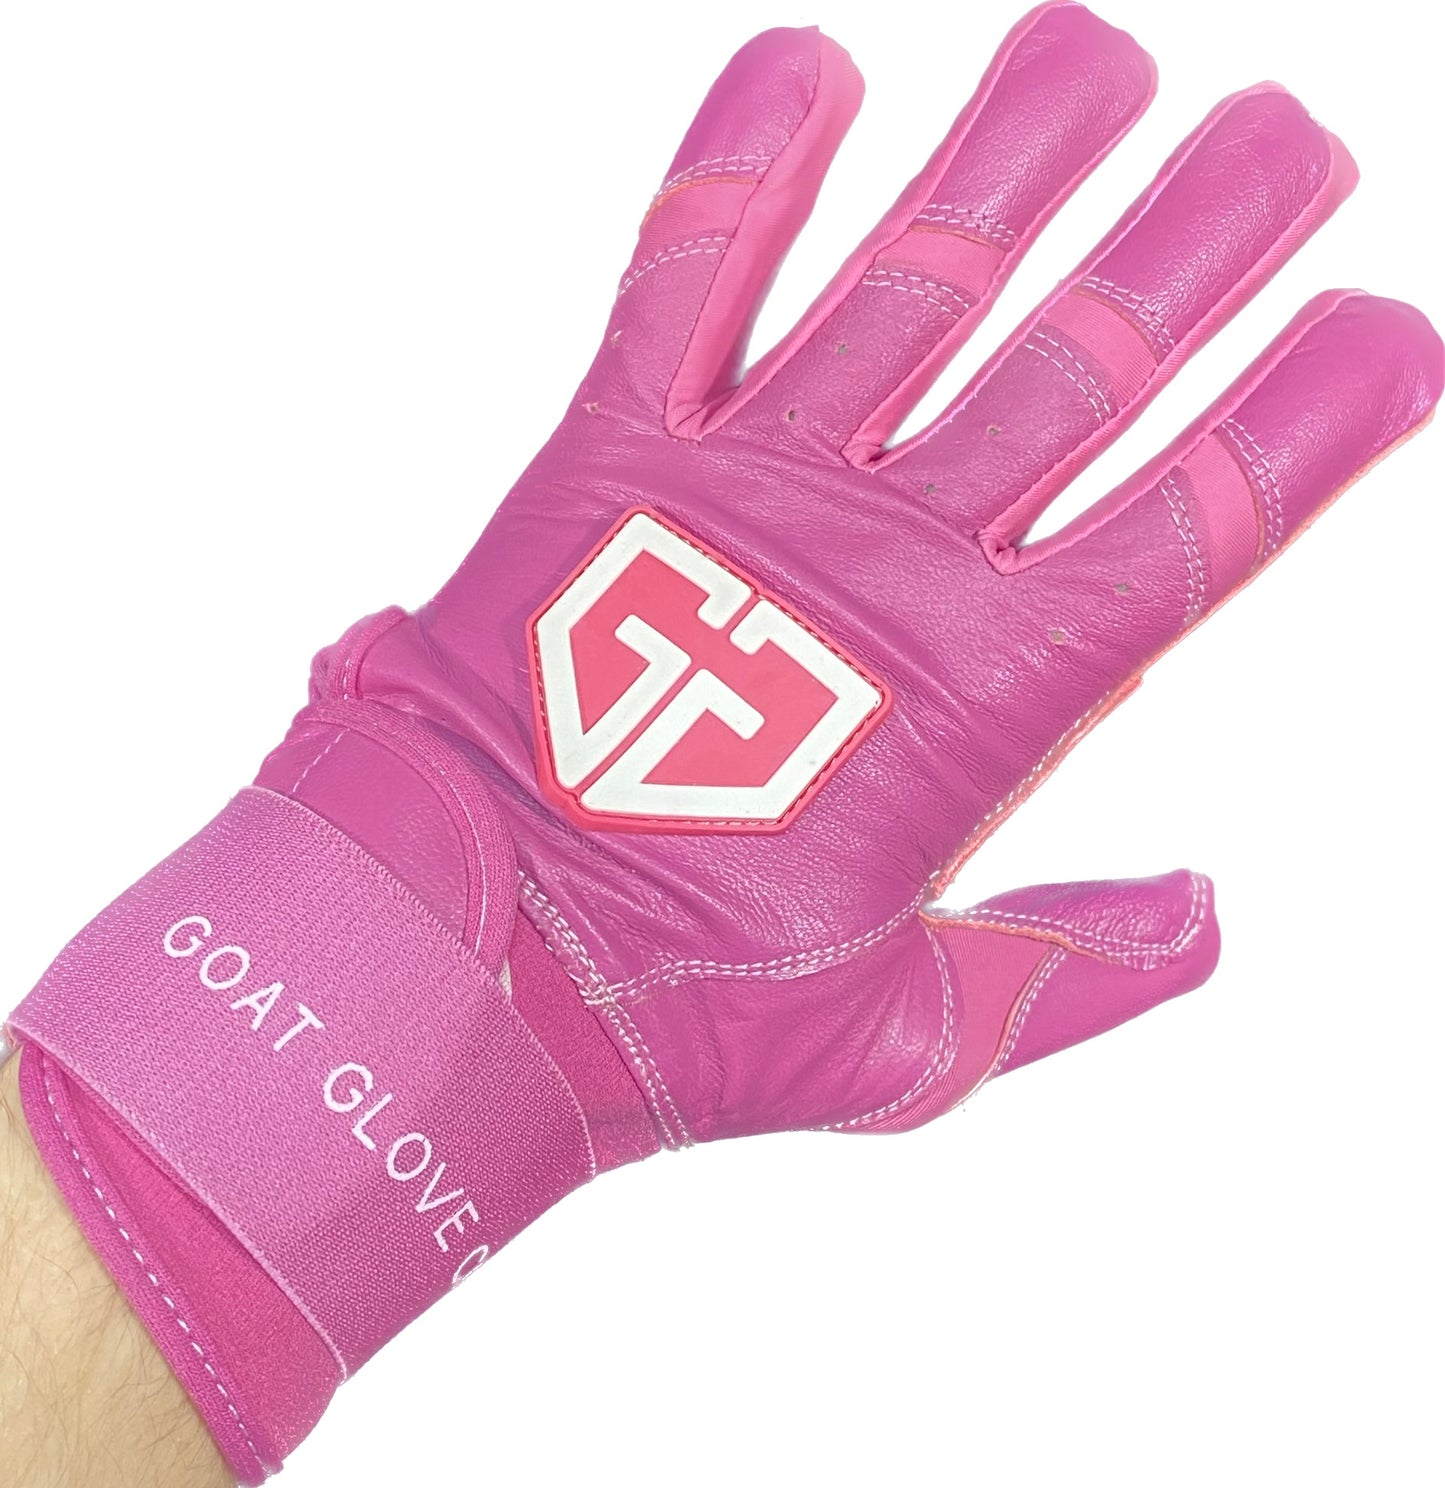 Extended Cuff Cabretta Batting Gloves Pink